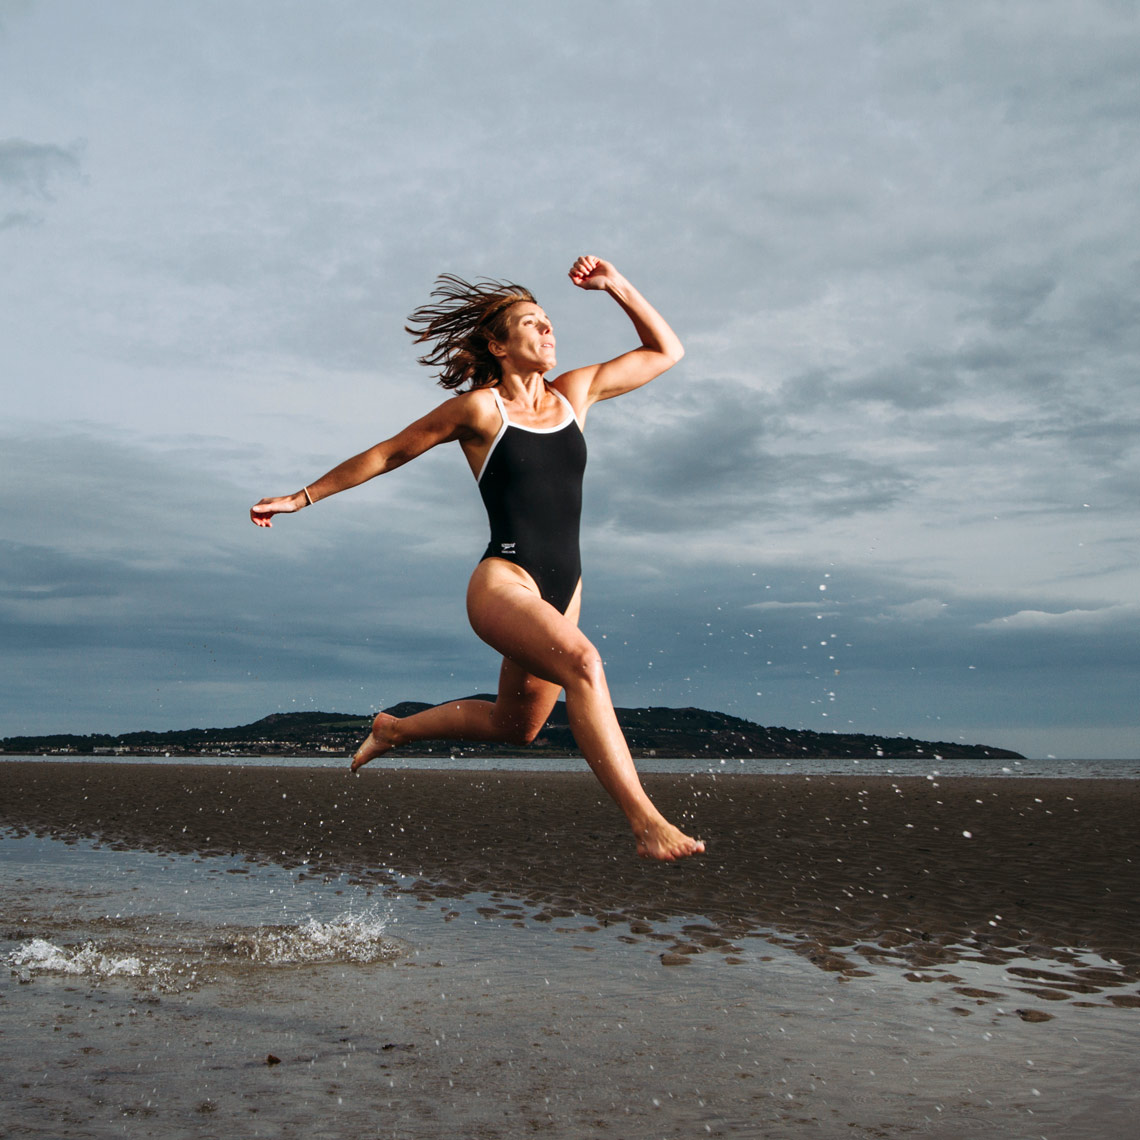  athlete portraits: runner sprints on beach 